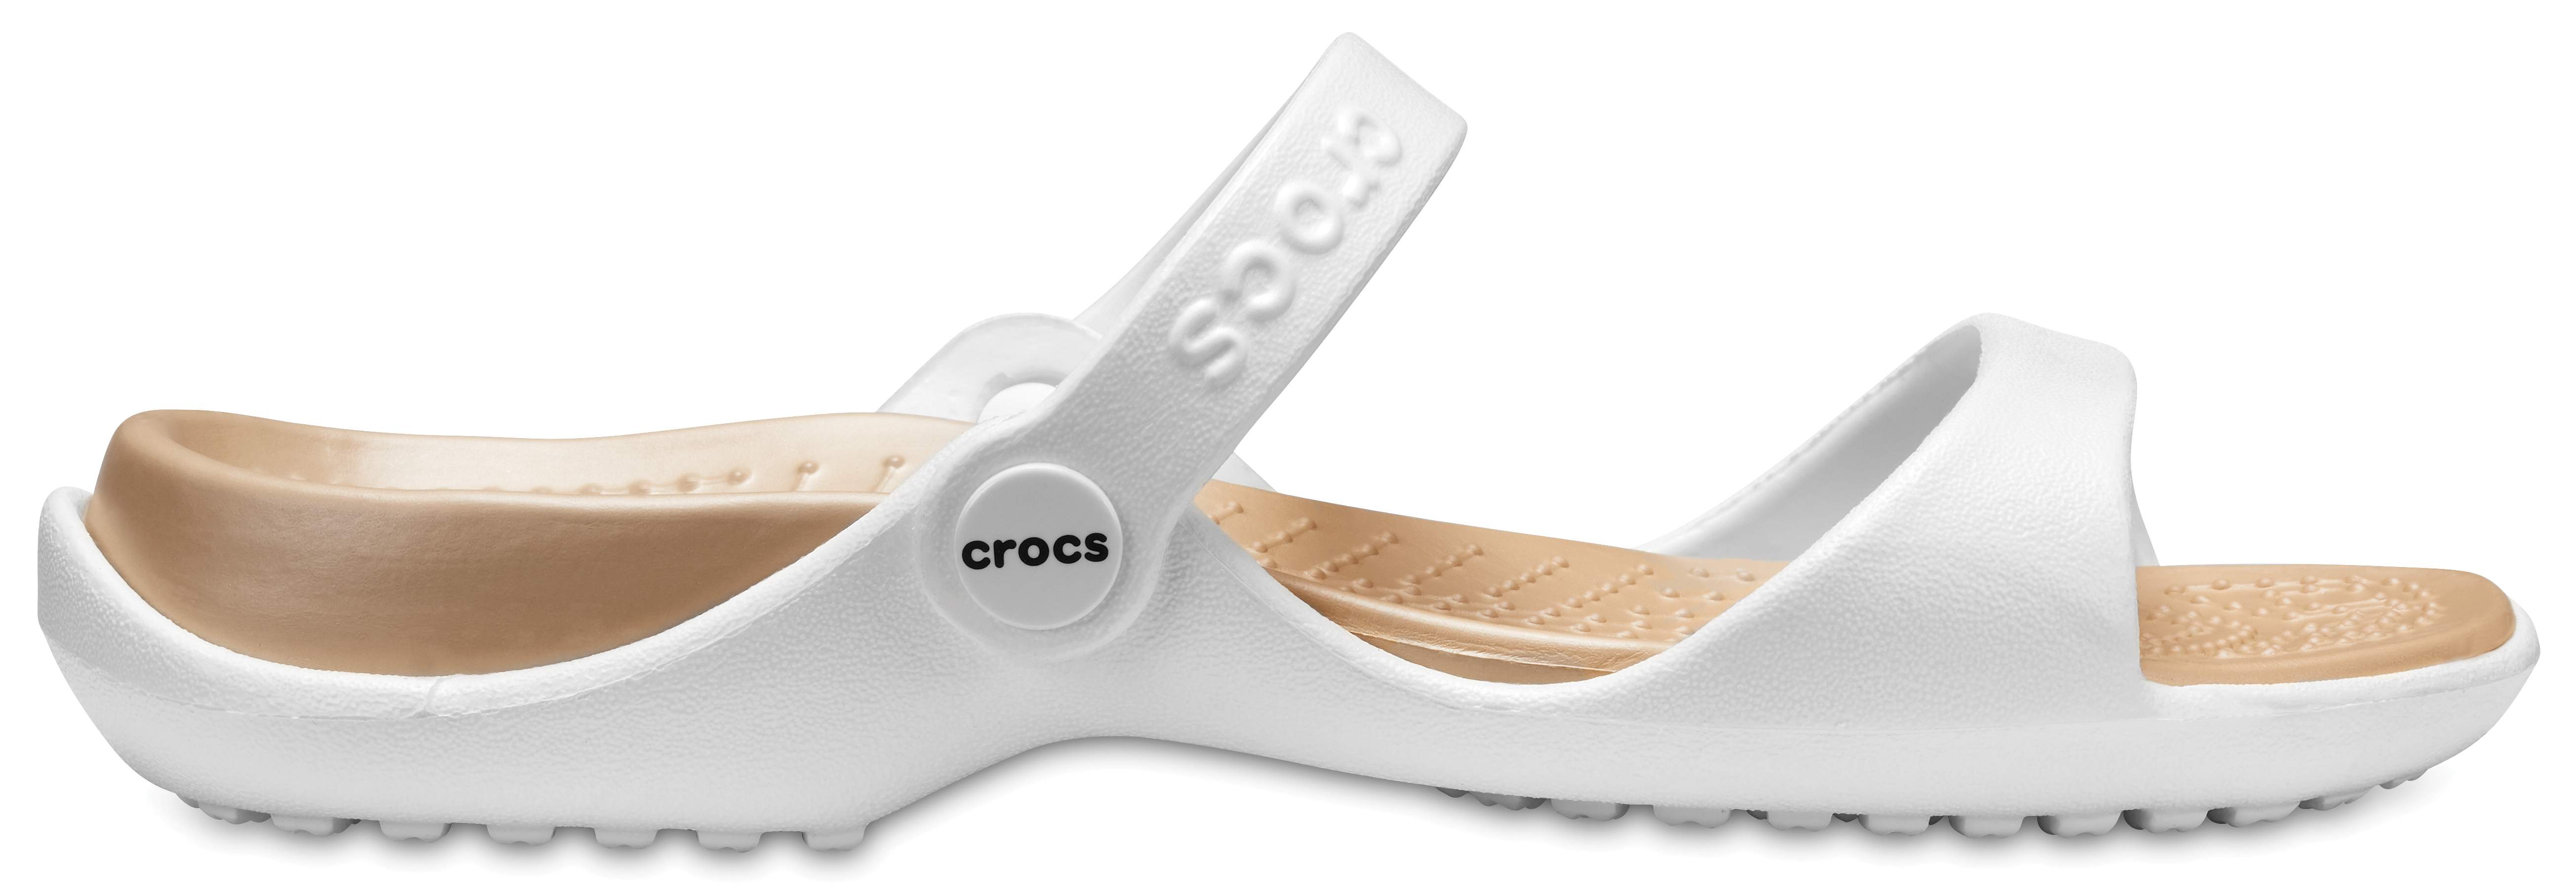 crocs cleo clearance